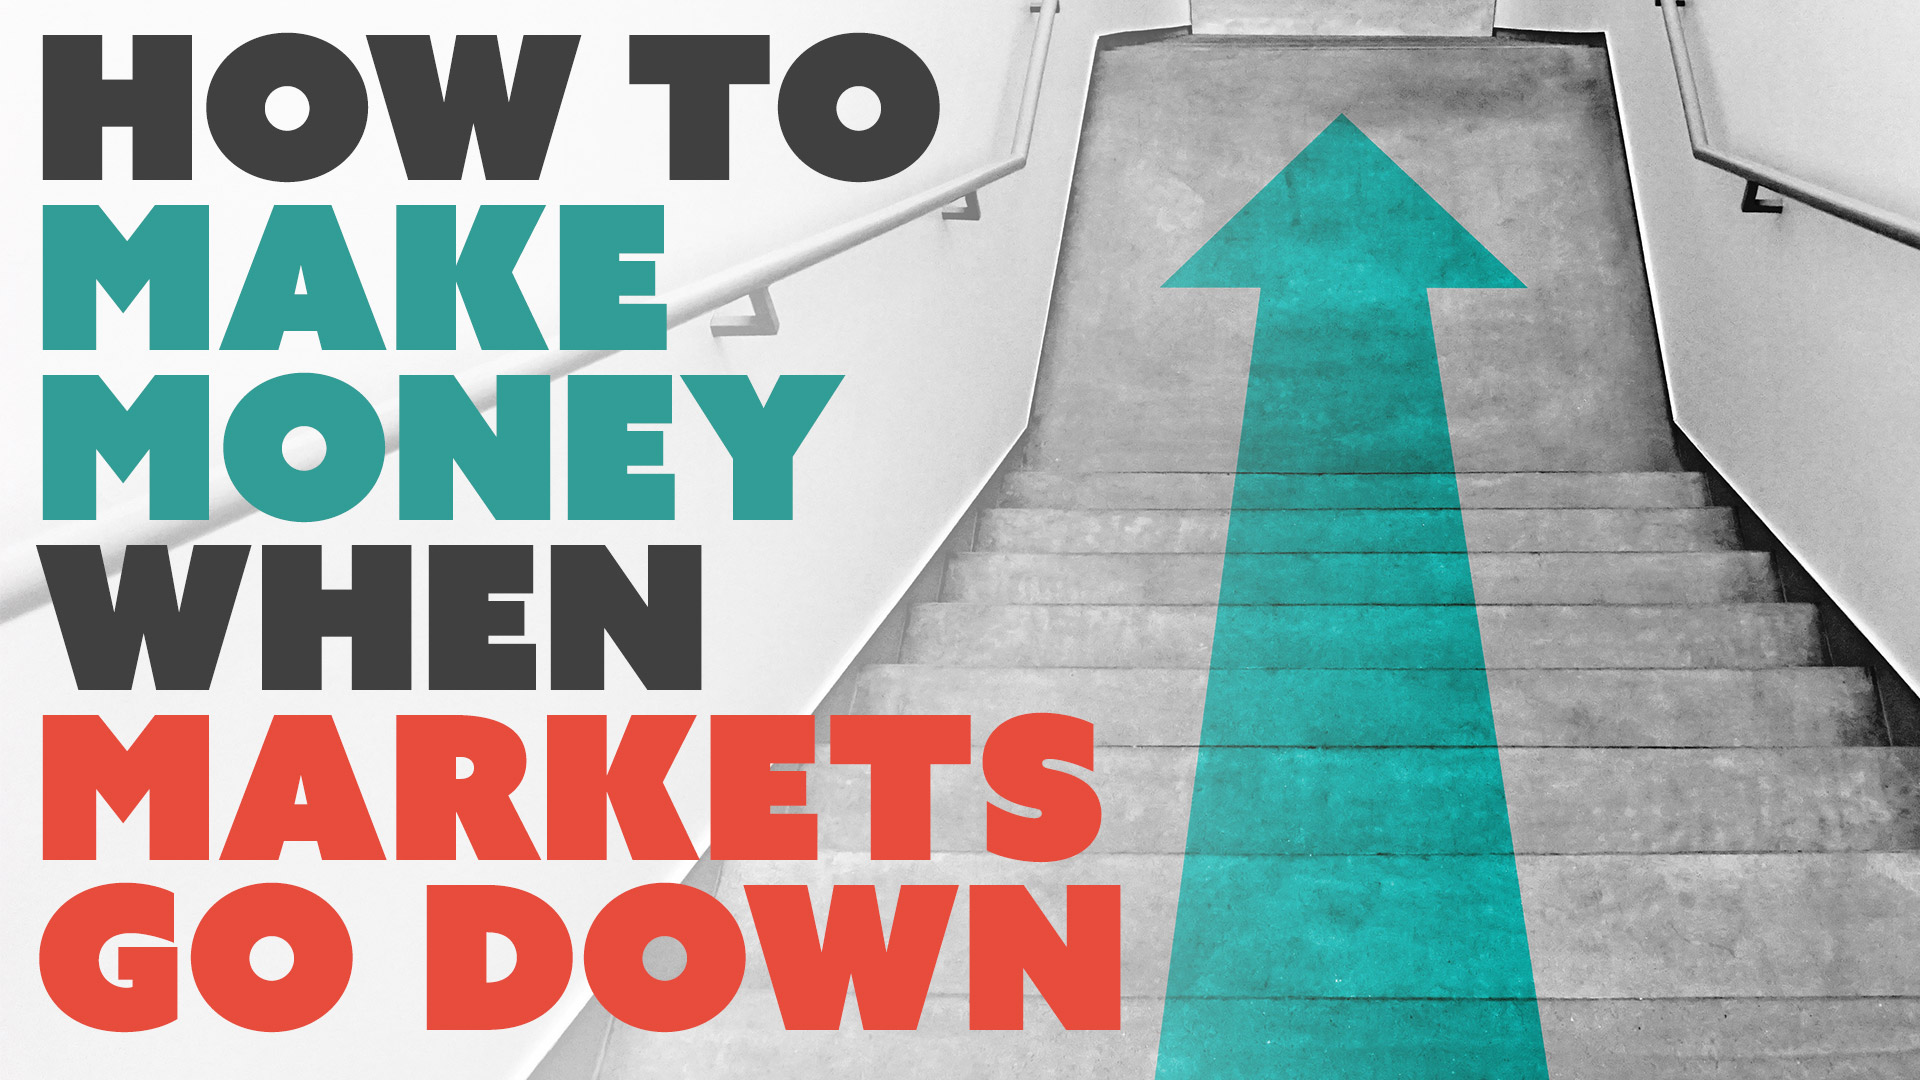 Down market. Markets go down. Money go down. Marketing going down. Market go down mem.